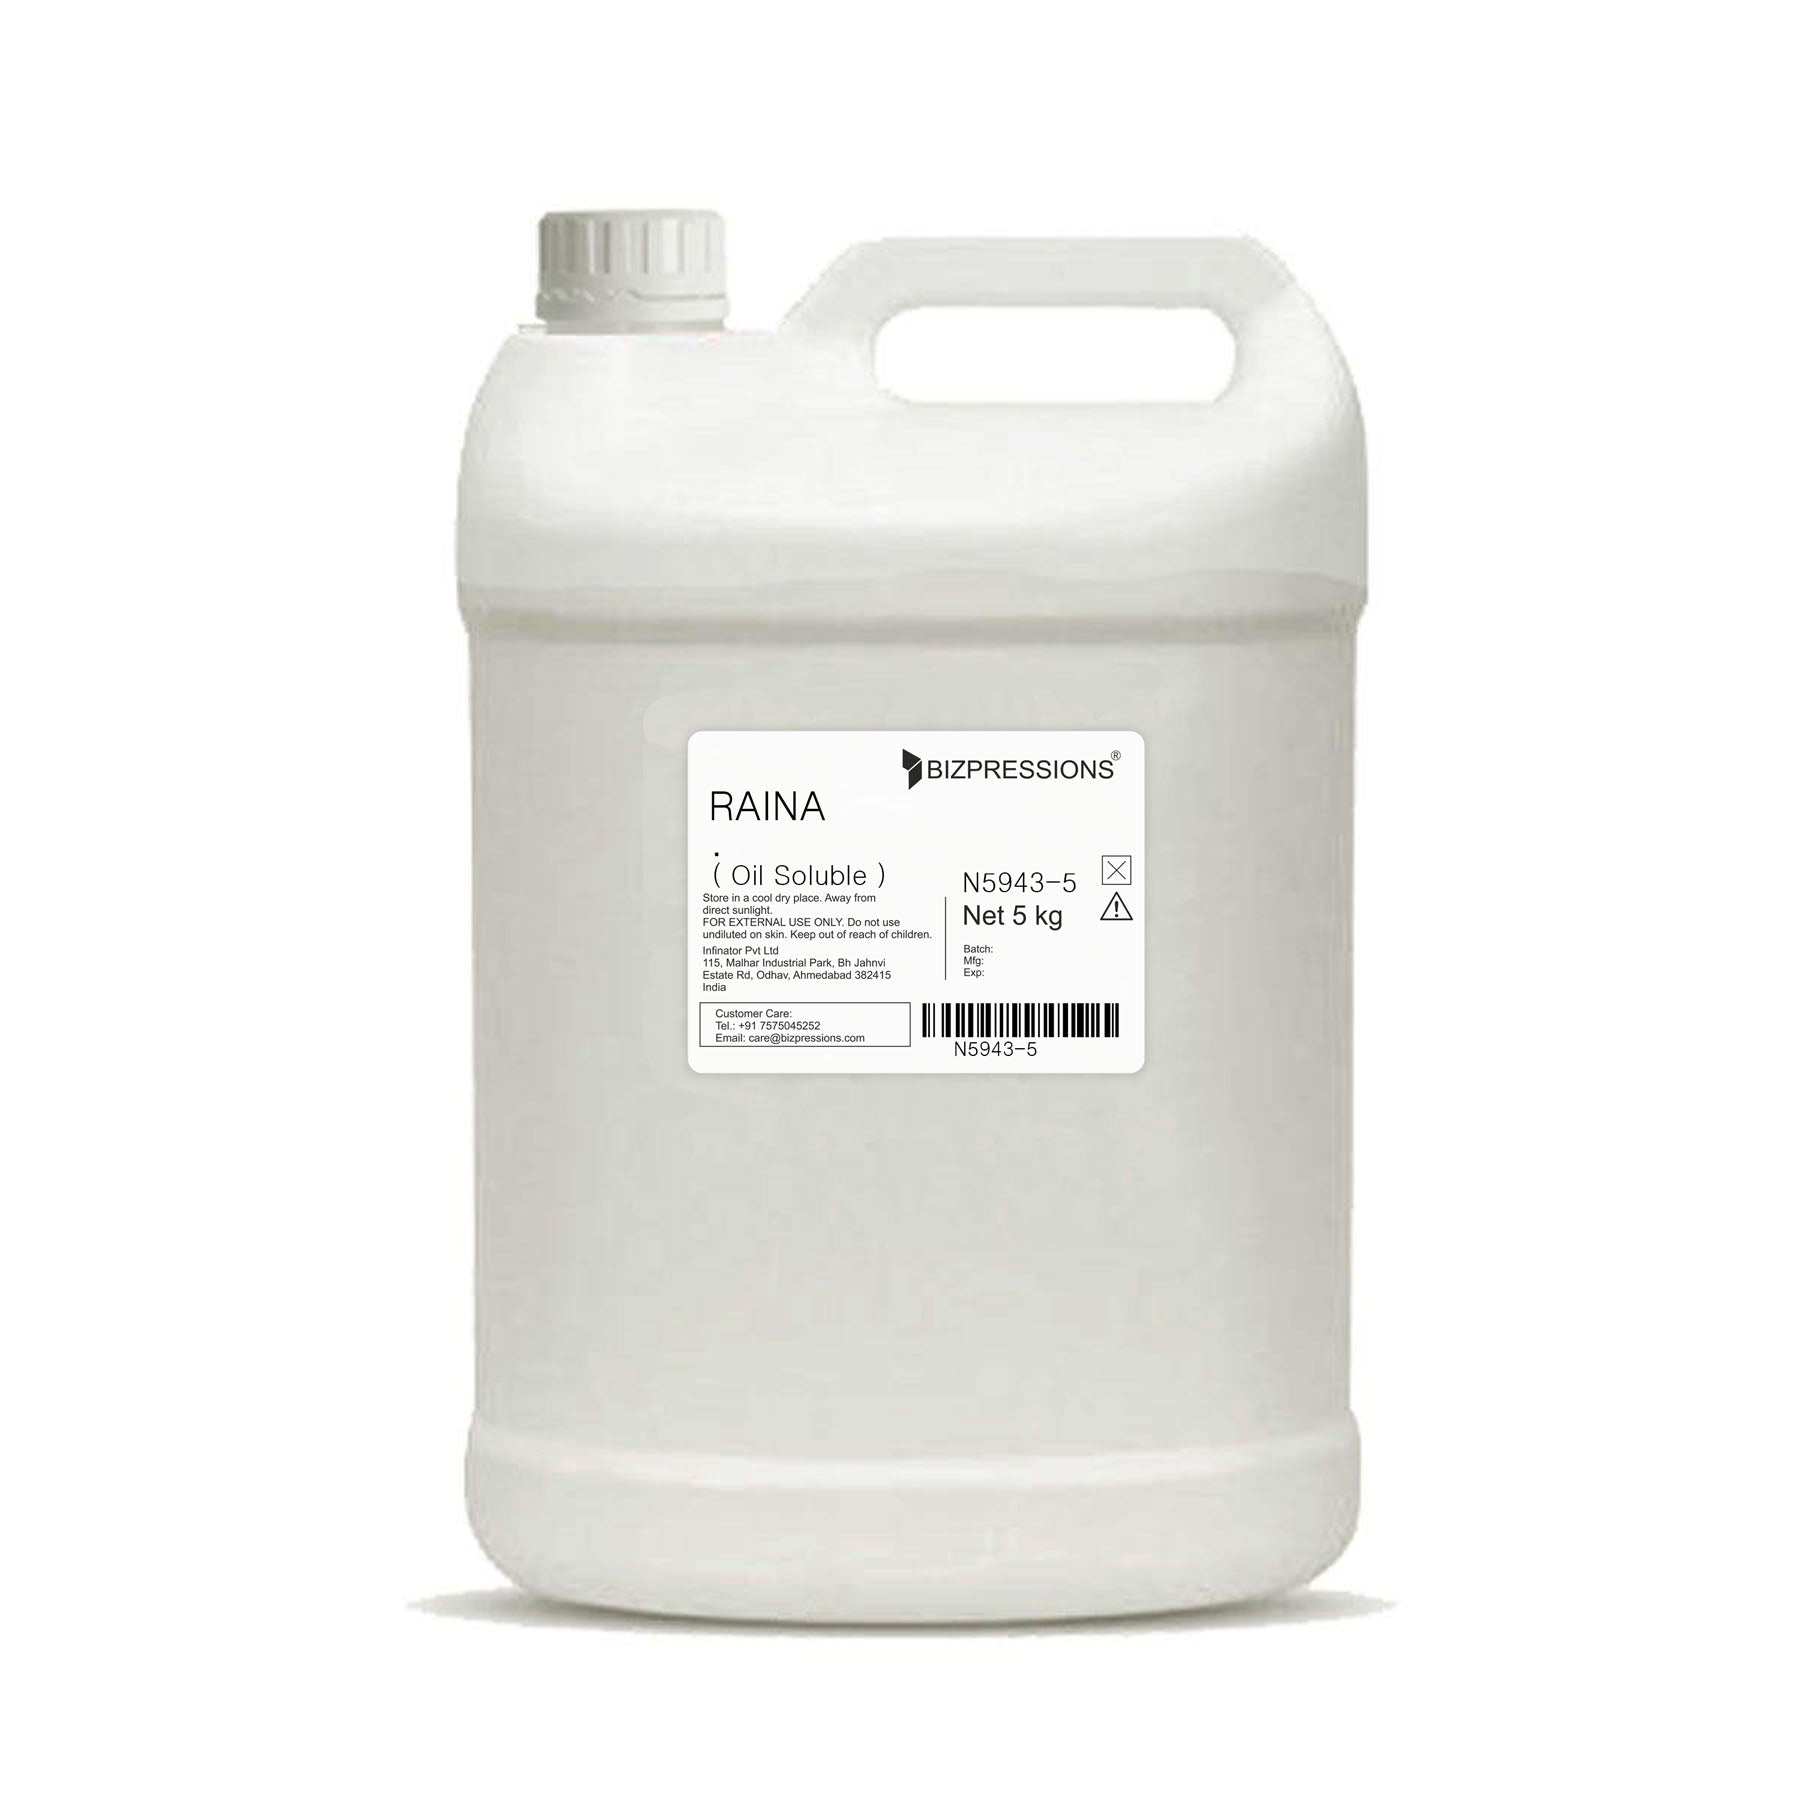 RAINA - Fragrance ( Oil Soluble ) - 5 kg